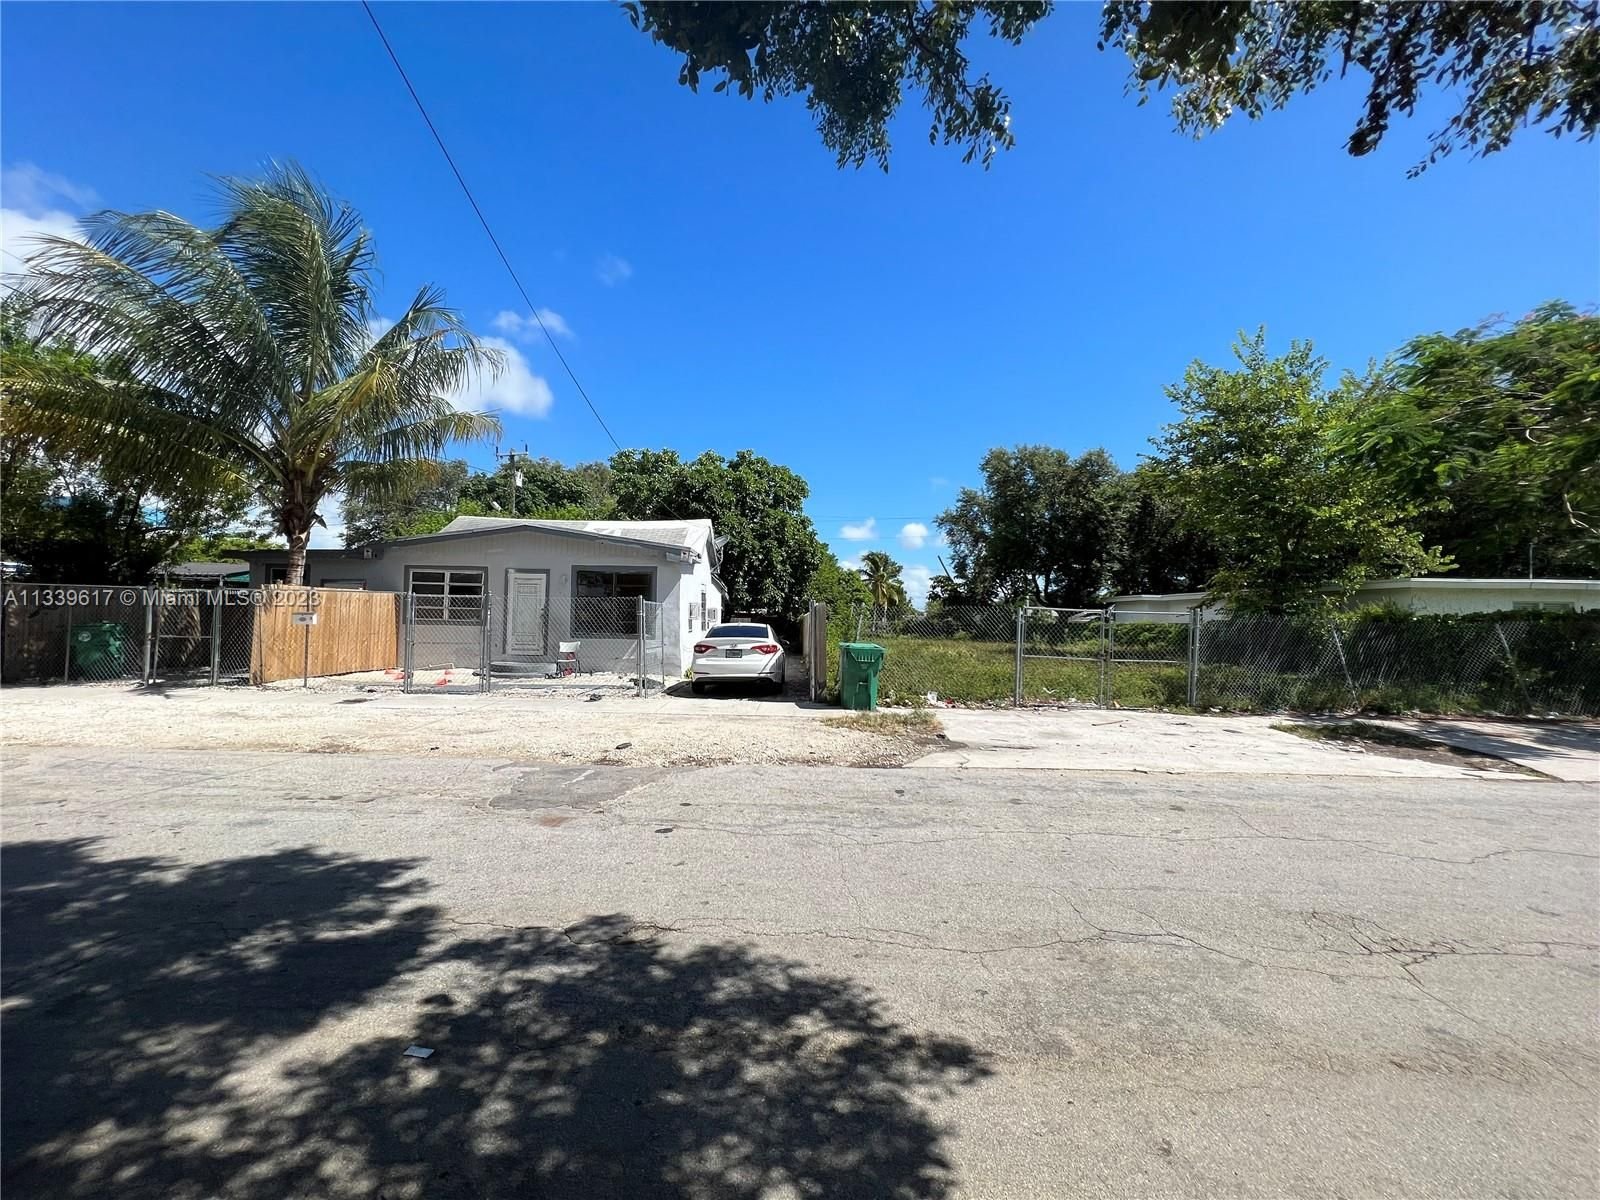 Real estate property located at 649 65th St, Miami-Dade County, Miami, FL